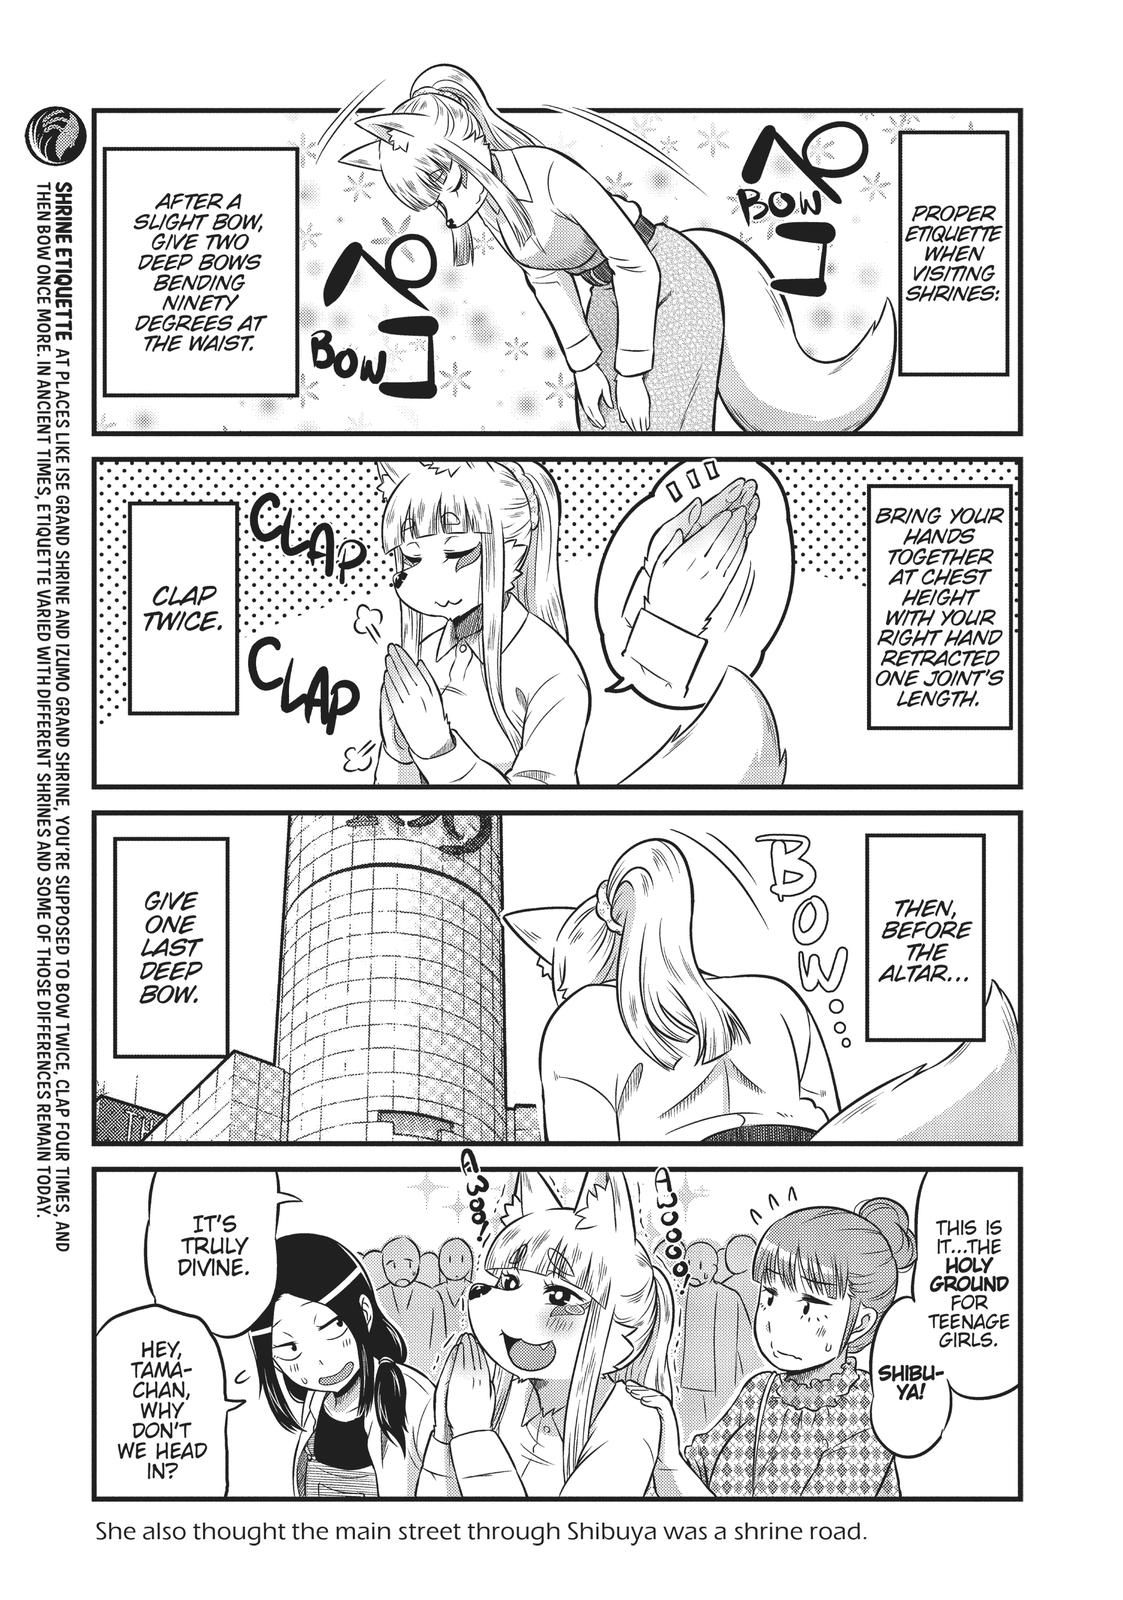 Tamamo-chan's a Fox! - chapter 8 - #3